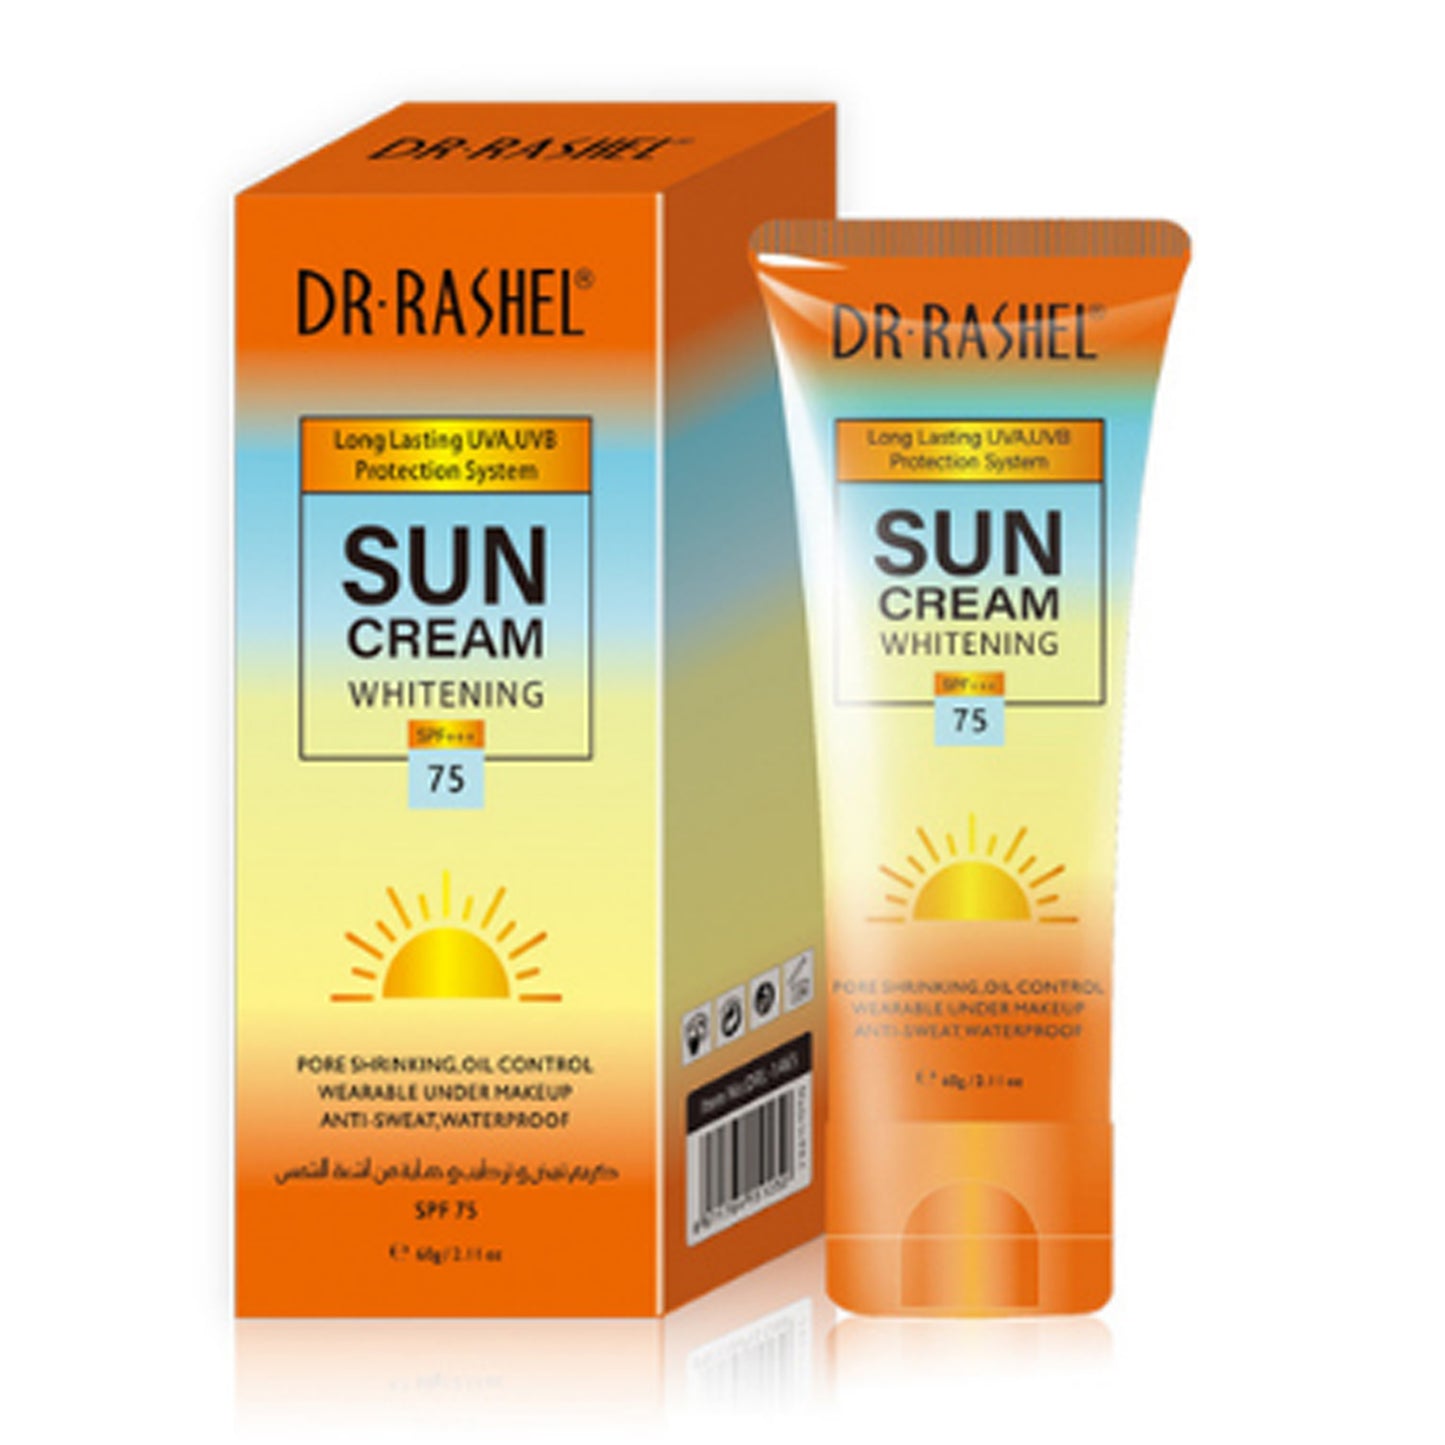 DR. RASHEL - WHITENING & MOISTURIZING SUN CREAM SPF+++ 75 - 60G